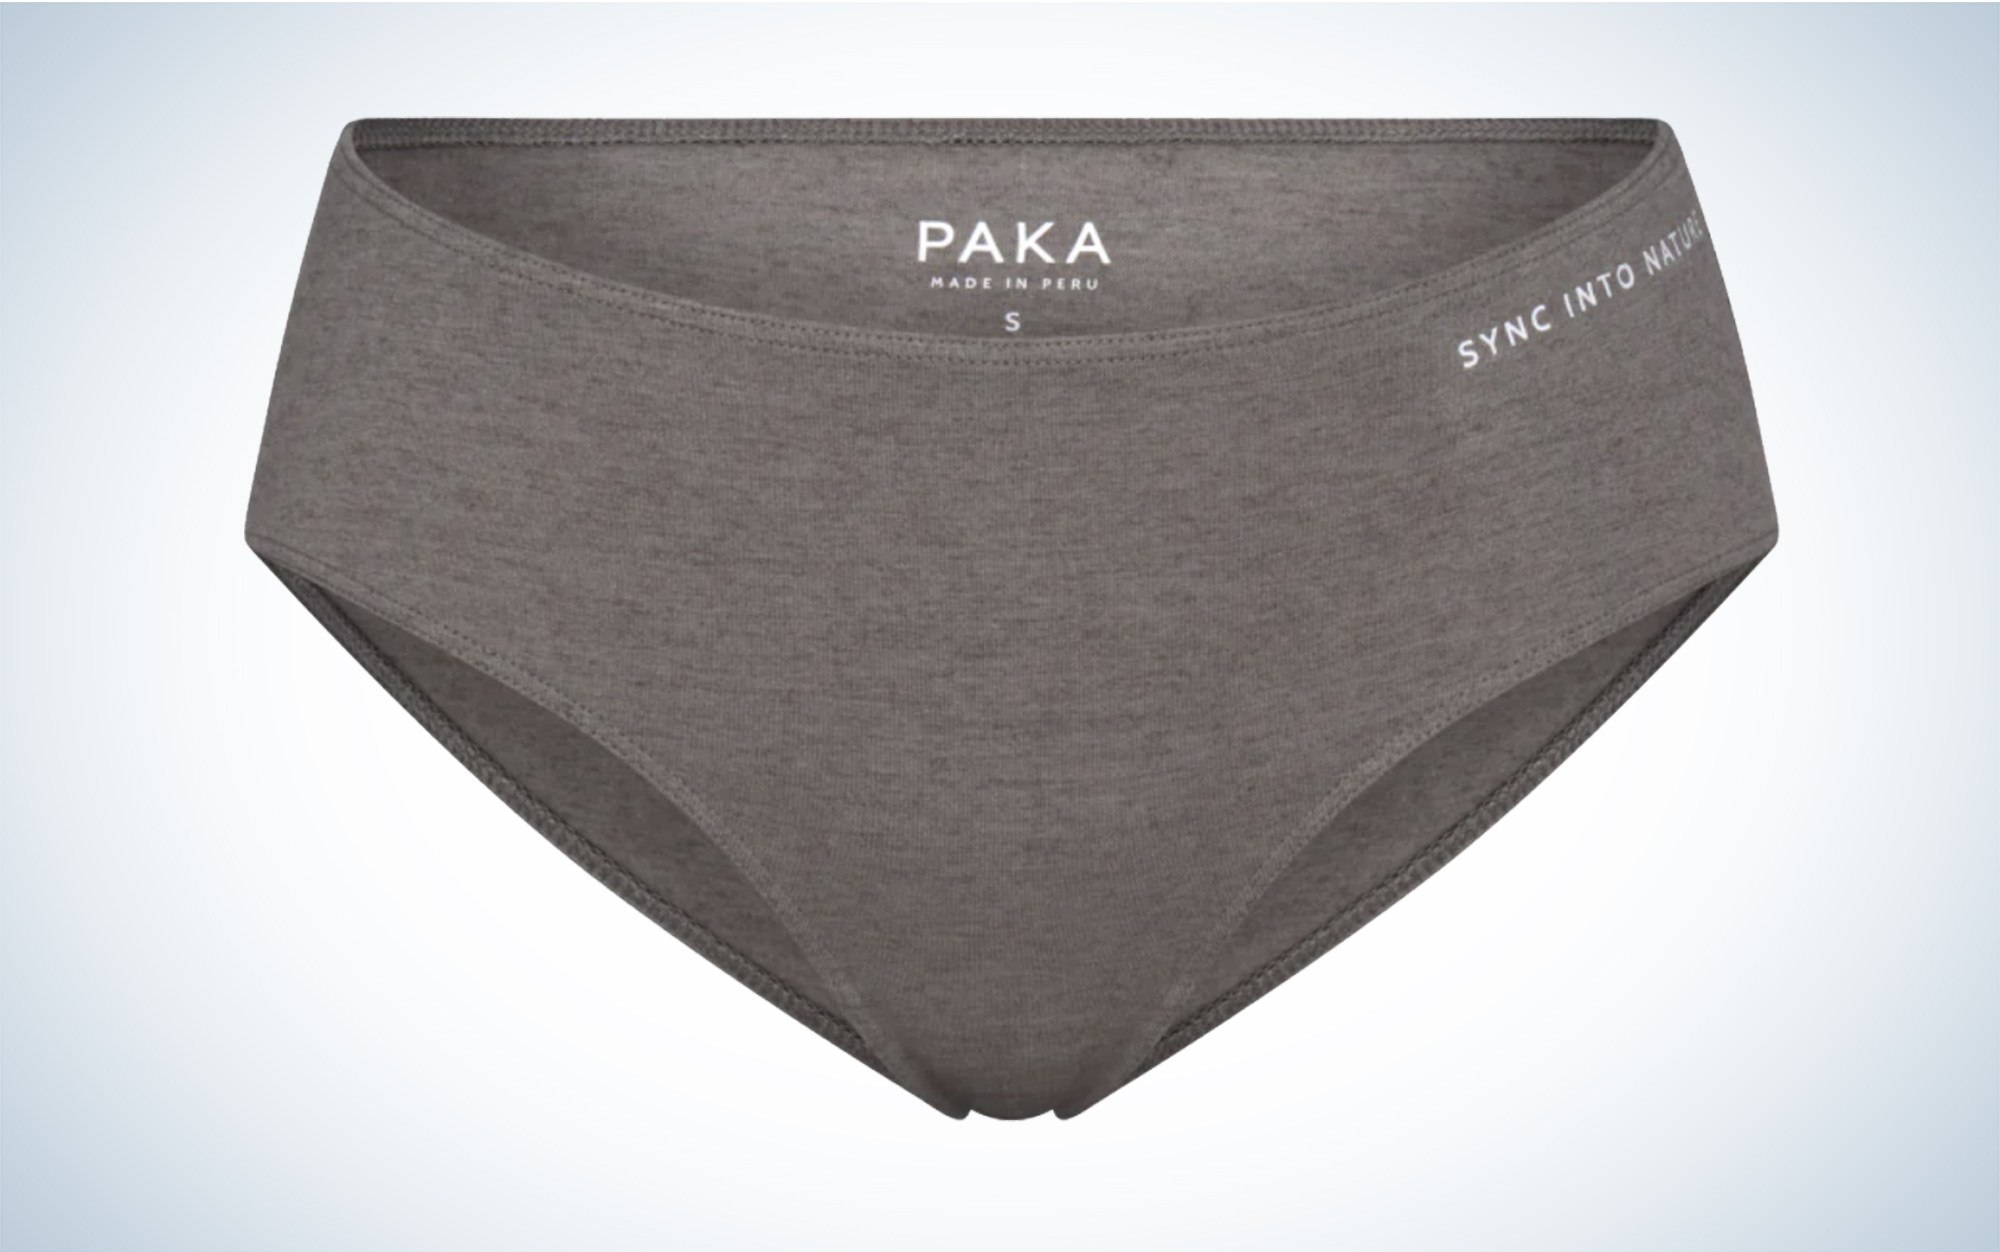 We tested Paka Alpaca Underwear.